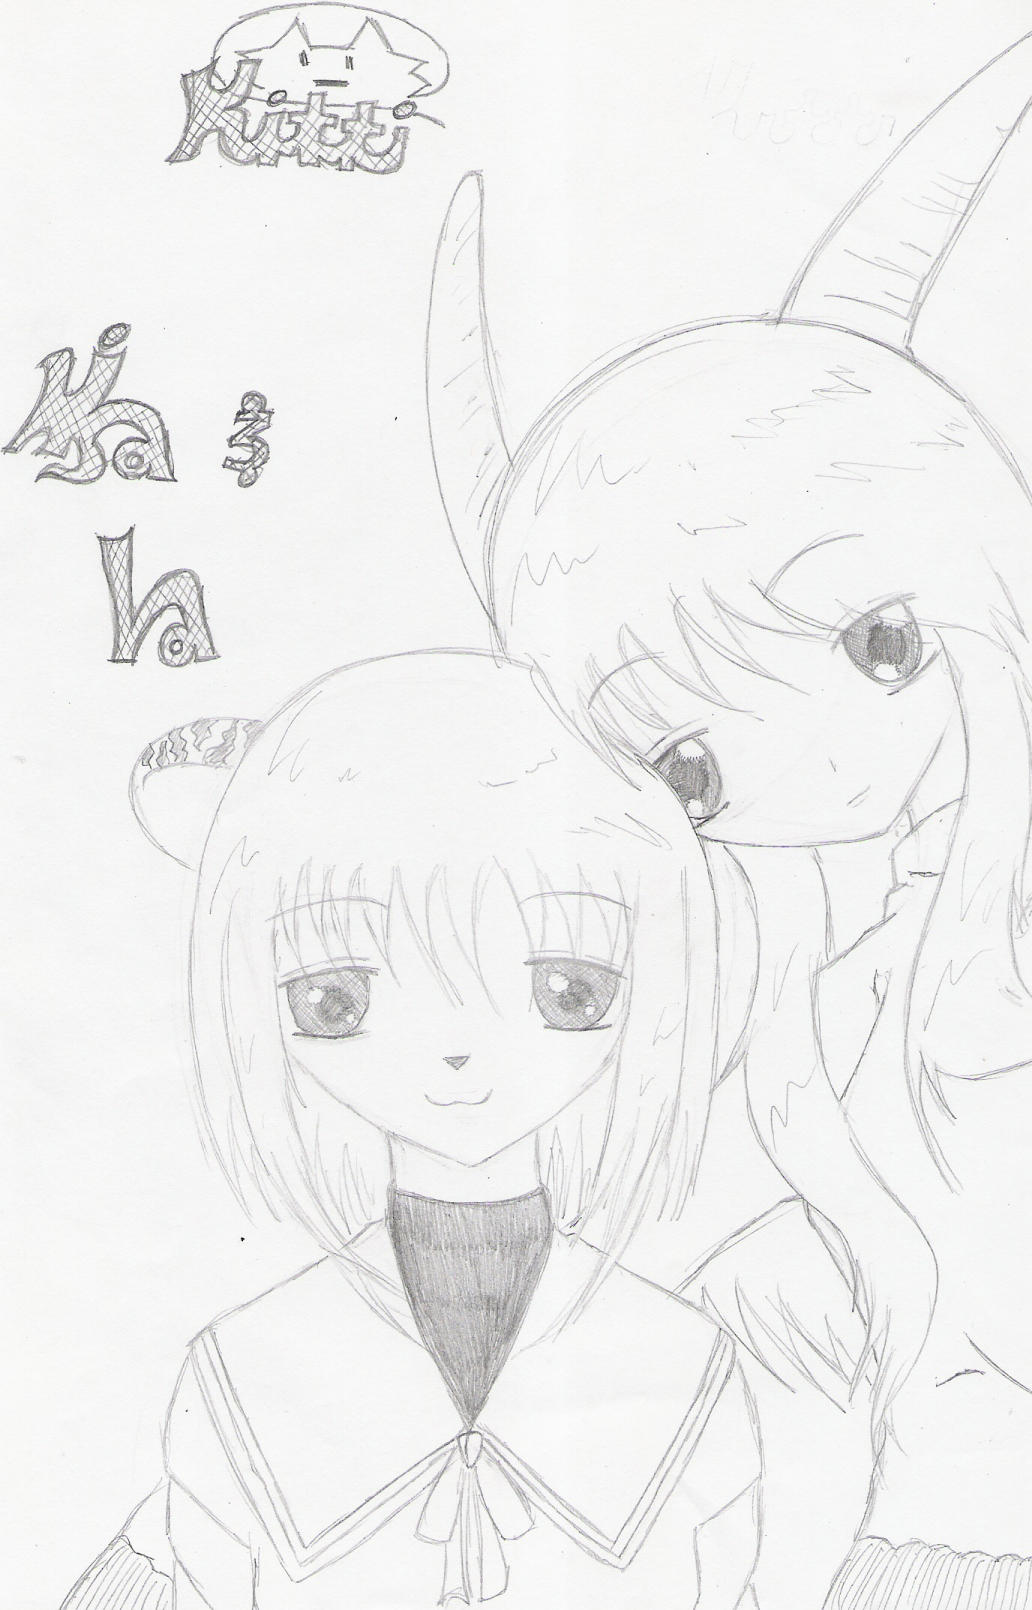 Kisa-san and Iva-chan ][ Made up chara ][ by kitti_is_my_name